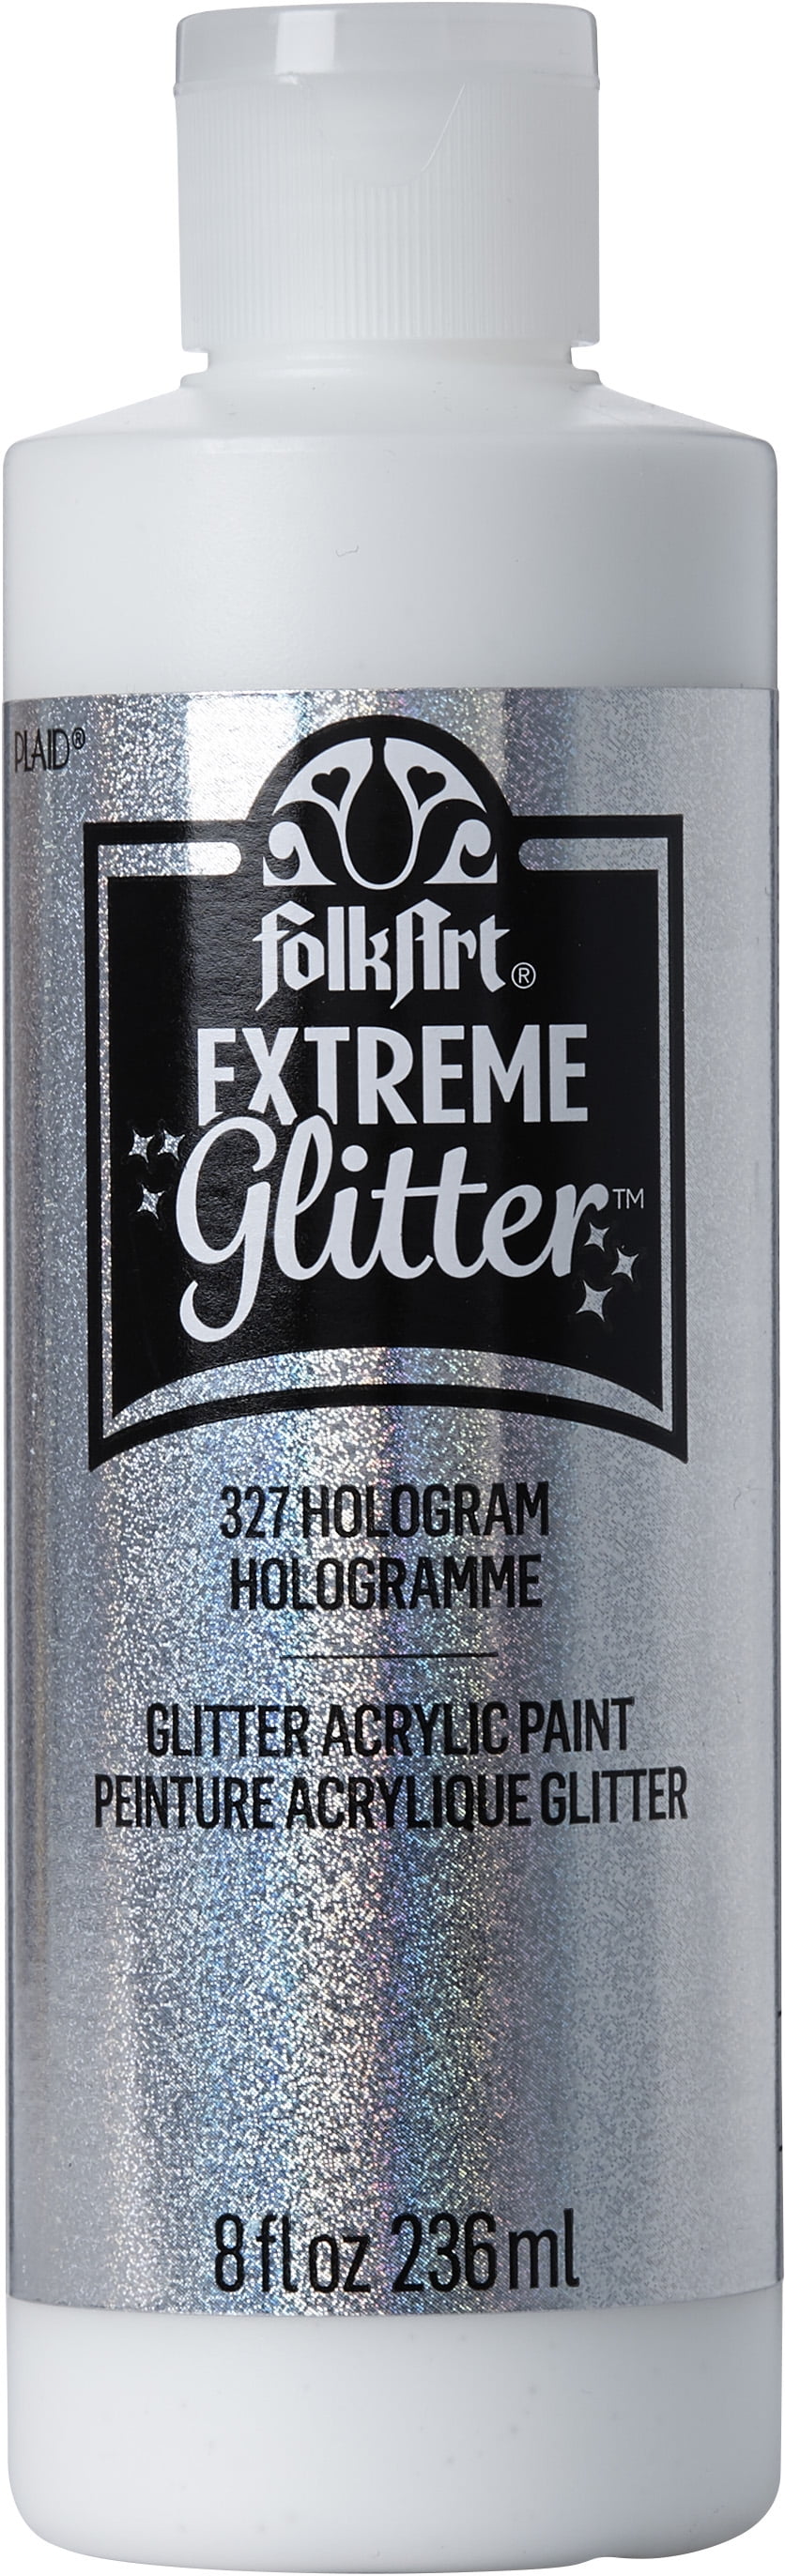 FolkArt Extreme Glitter Acrylic Paint, Hologram, 8 fl oz